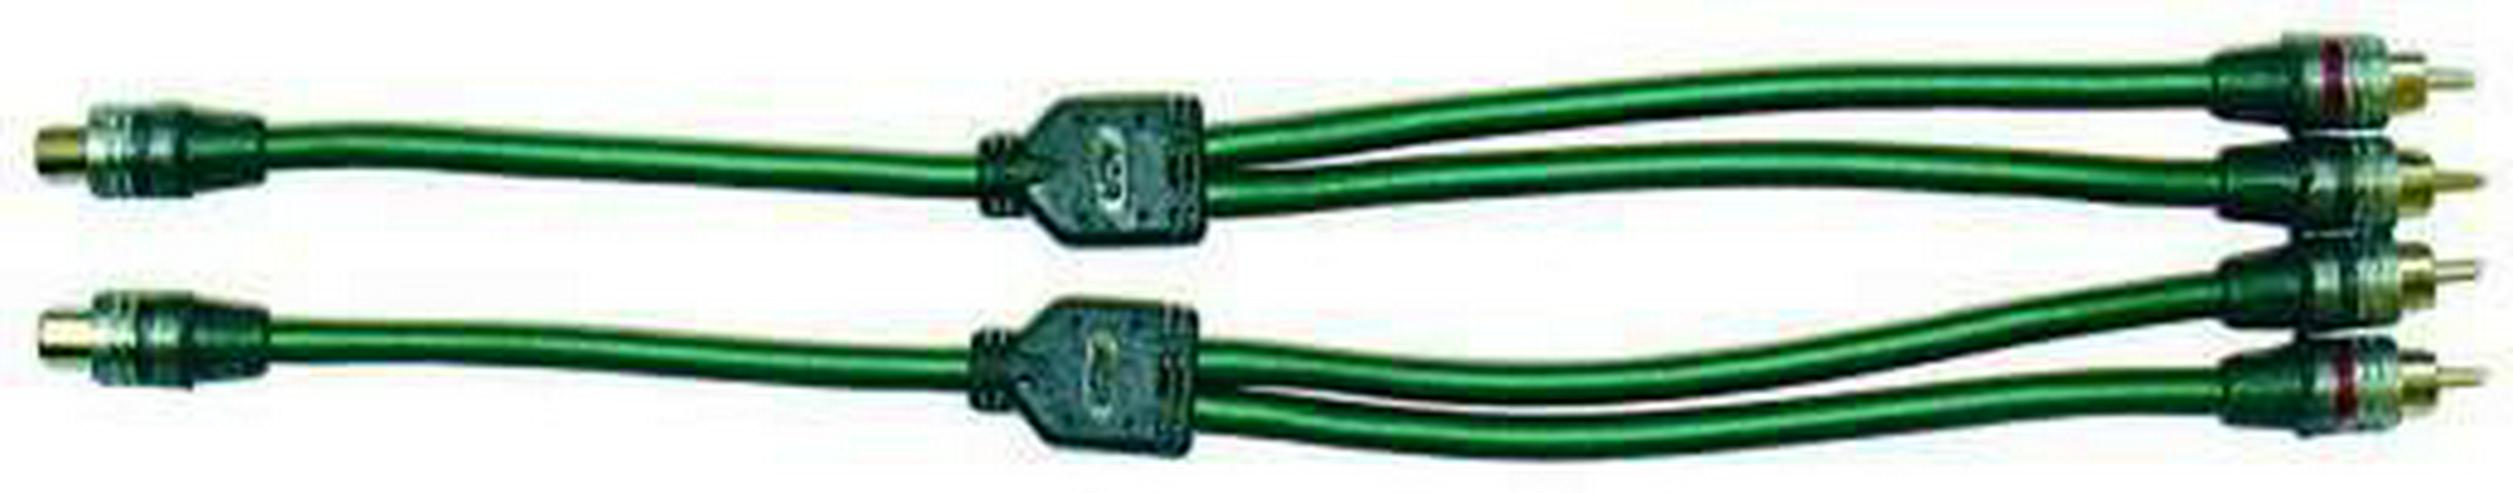 ACR HKAB03YF Cinch Kabel 5mm 2 fach - Lautsprecher, Subwoofer & Verstärker - Bild 1